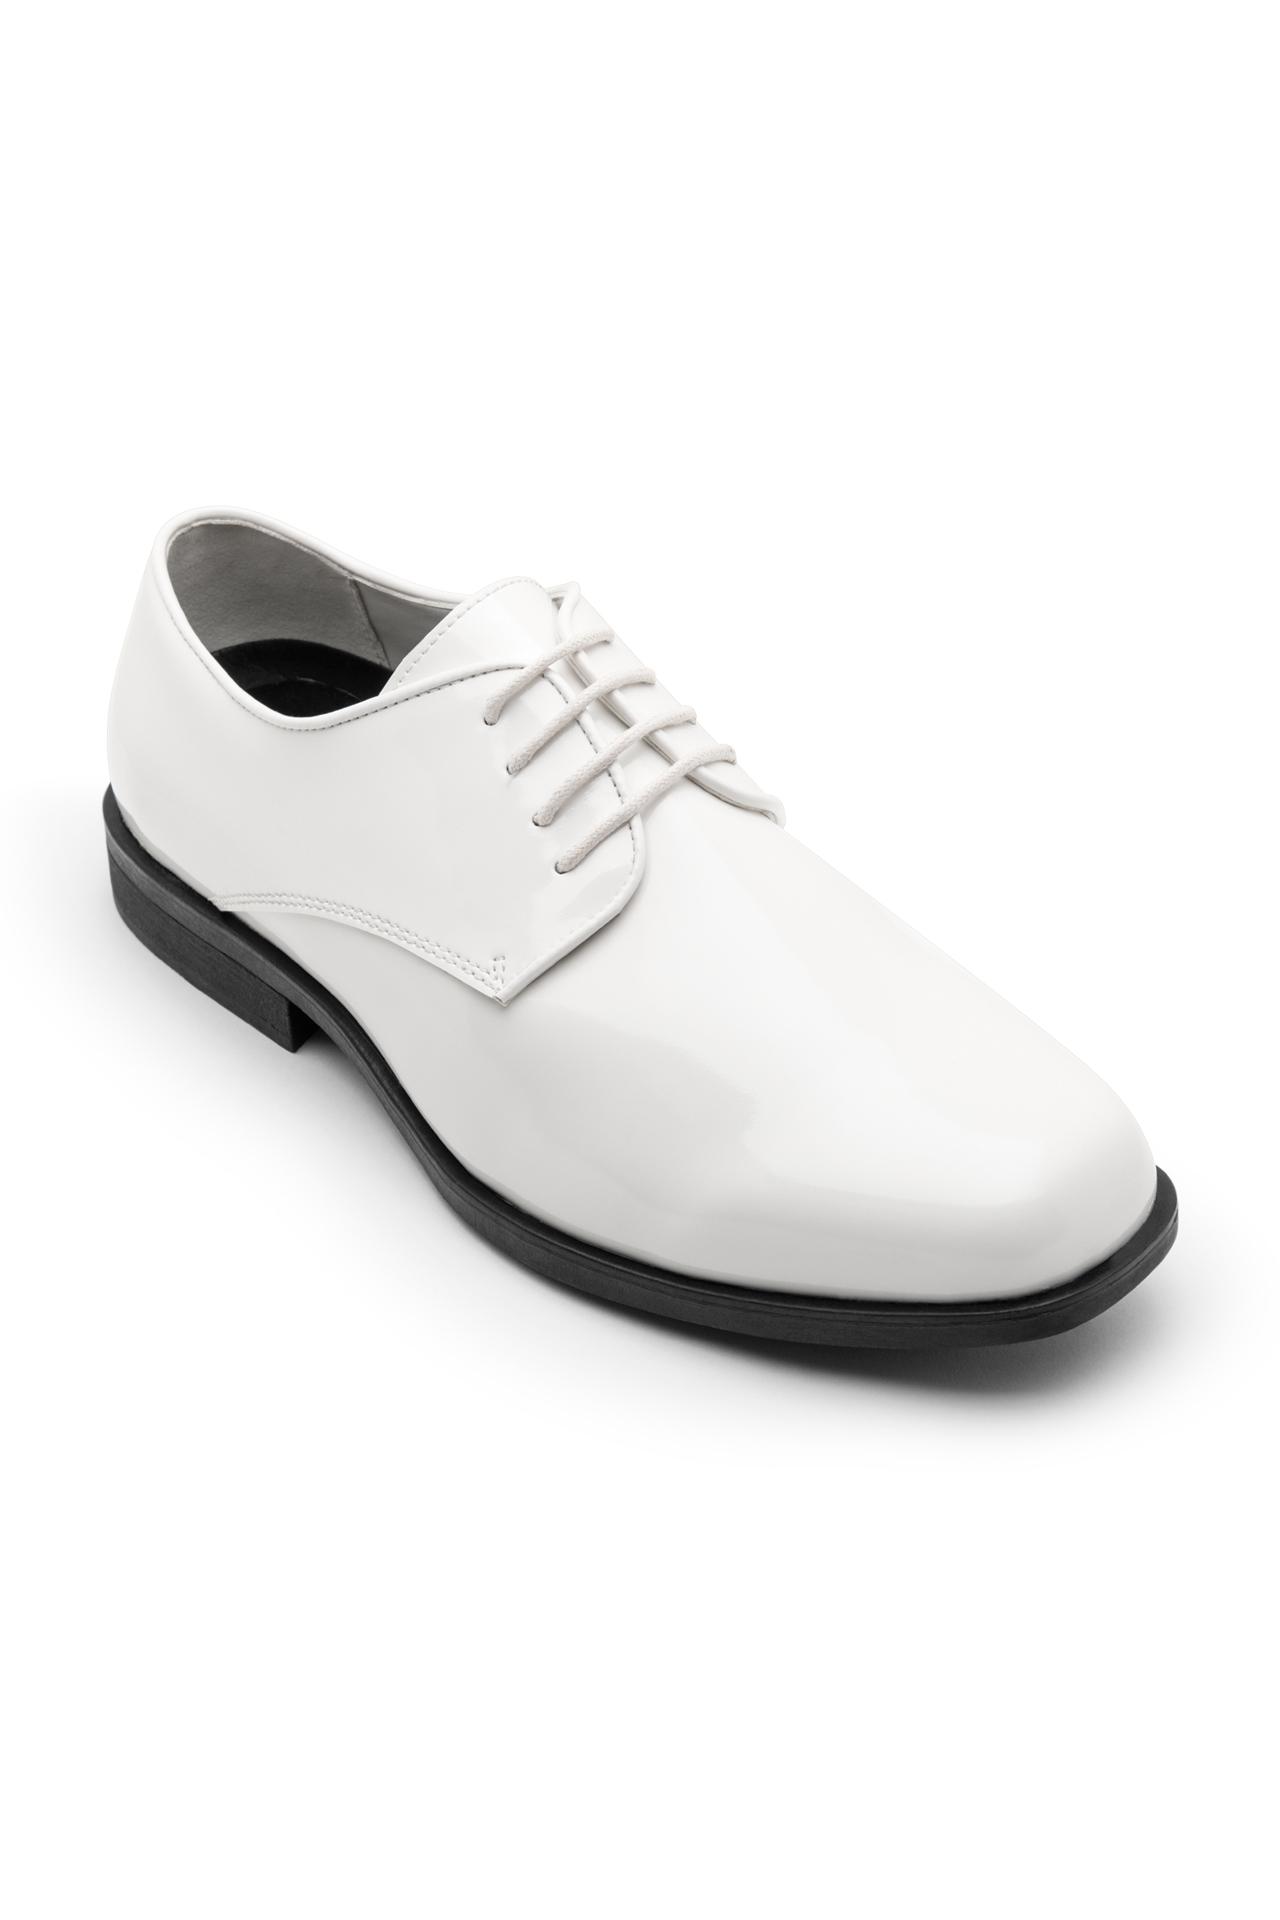 White Allegro Shoe - T.N. Boone TuxedosT.N. Boone Tuxedos